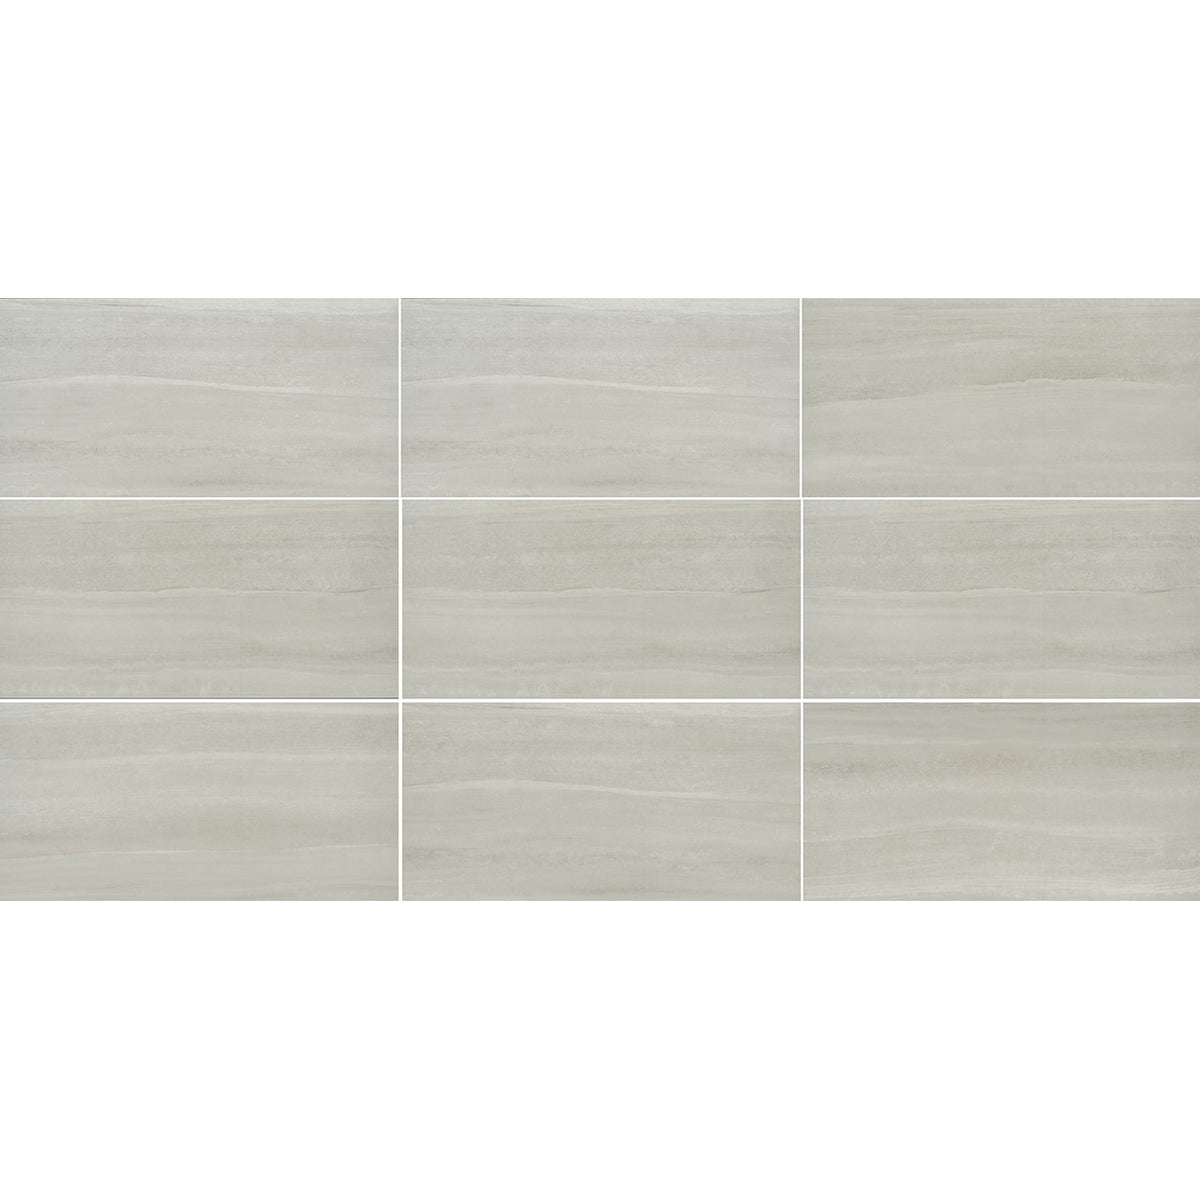 Floors 2000 - Alliance 12 in. x 24 in. Matte Porcelain Tile - Heather Gray Variation